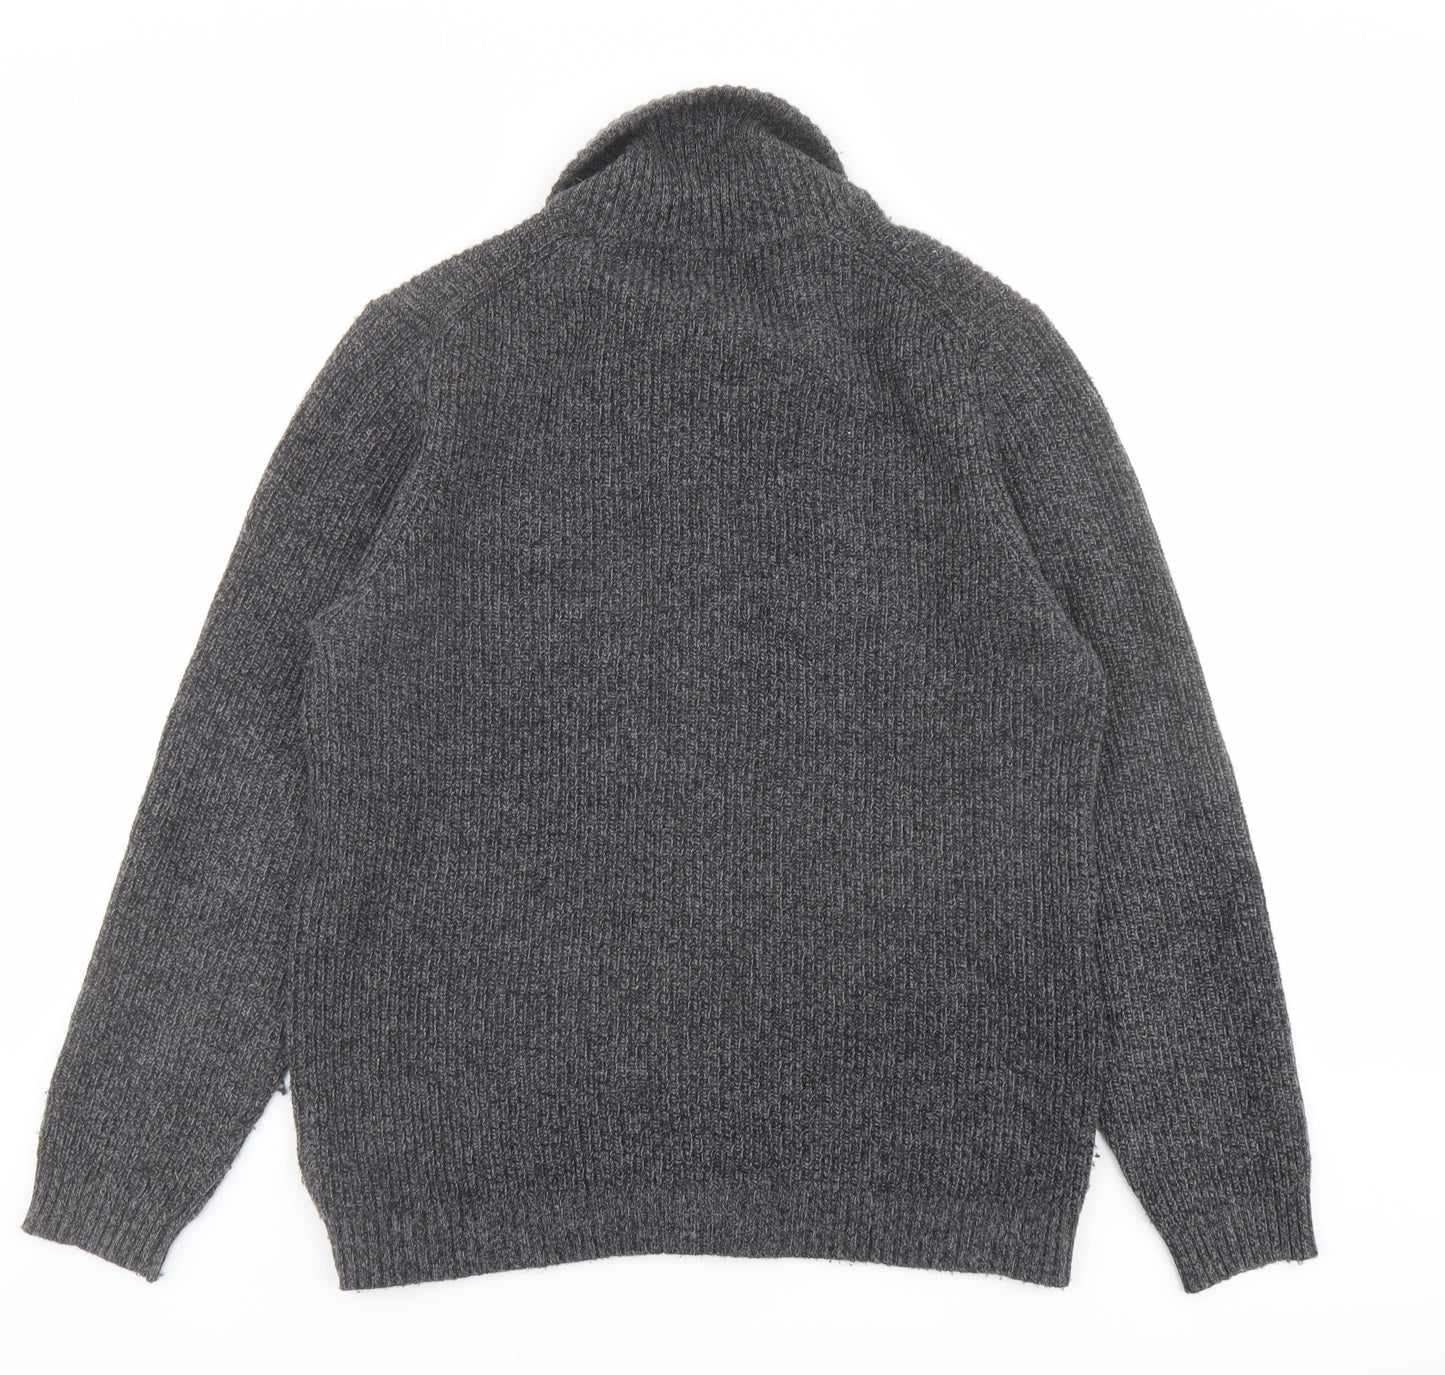 Marks and Spencer Mens Grey V-Neck Wool Cardigan Jumper Size M Long Sleeve